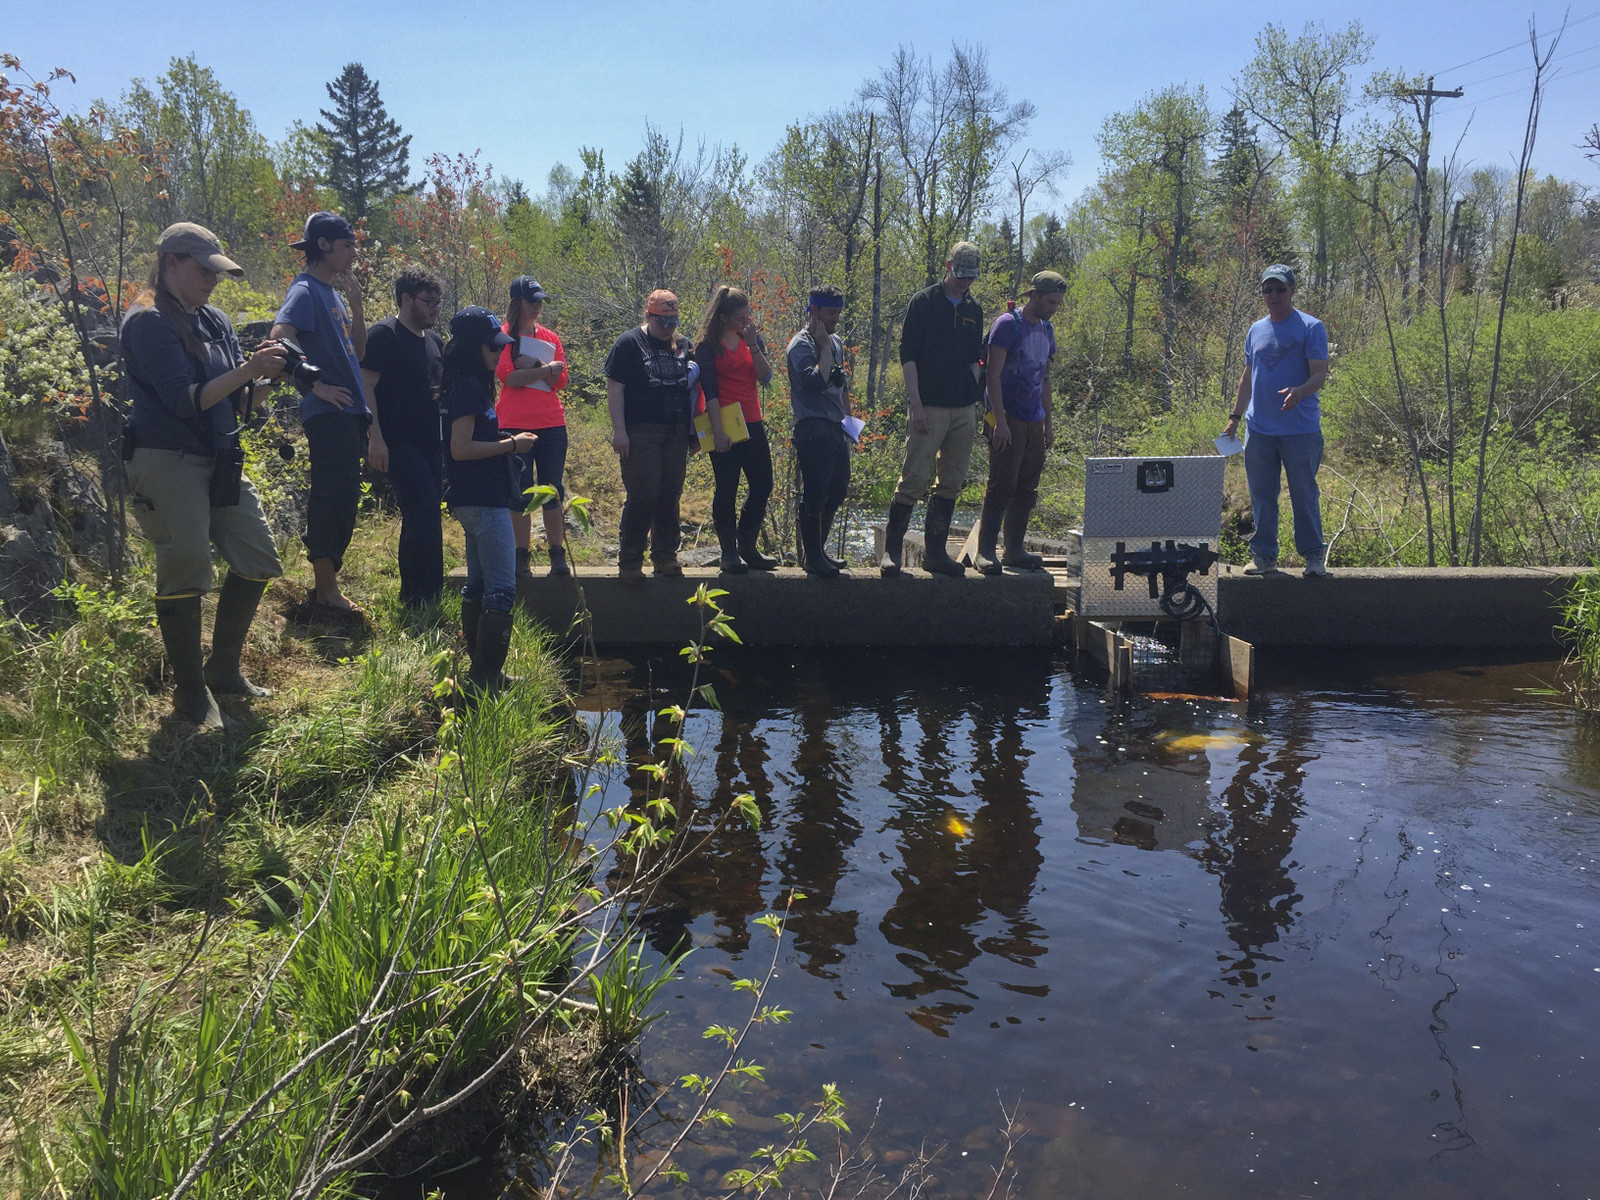 students testing new equipment at Acadia National Park